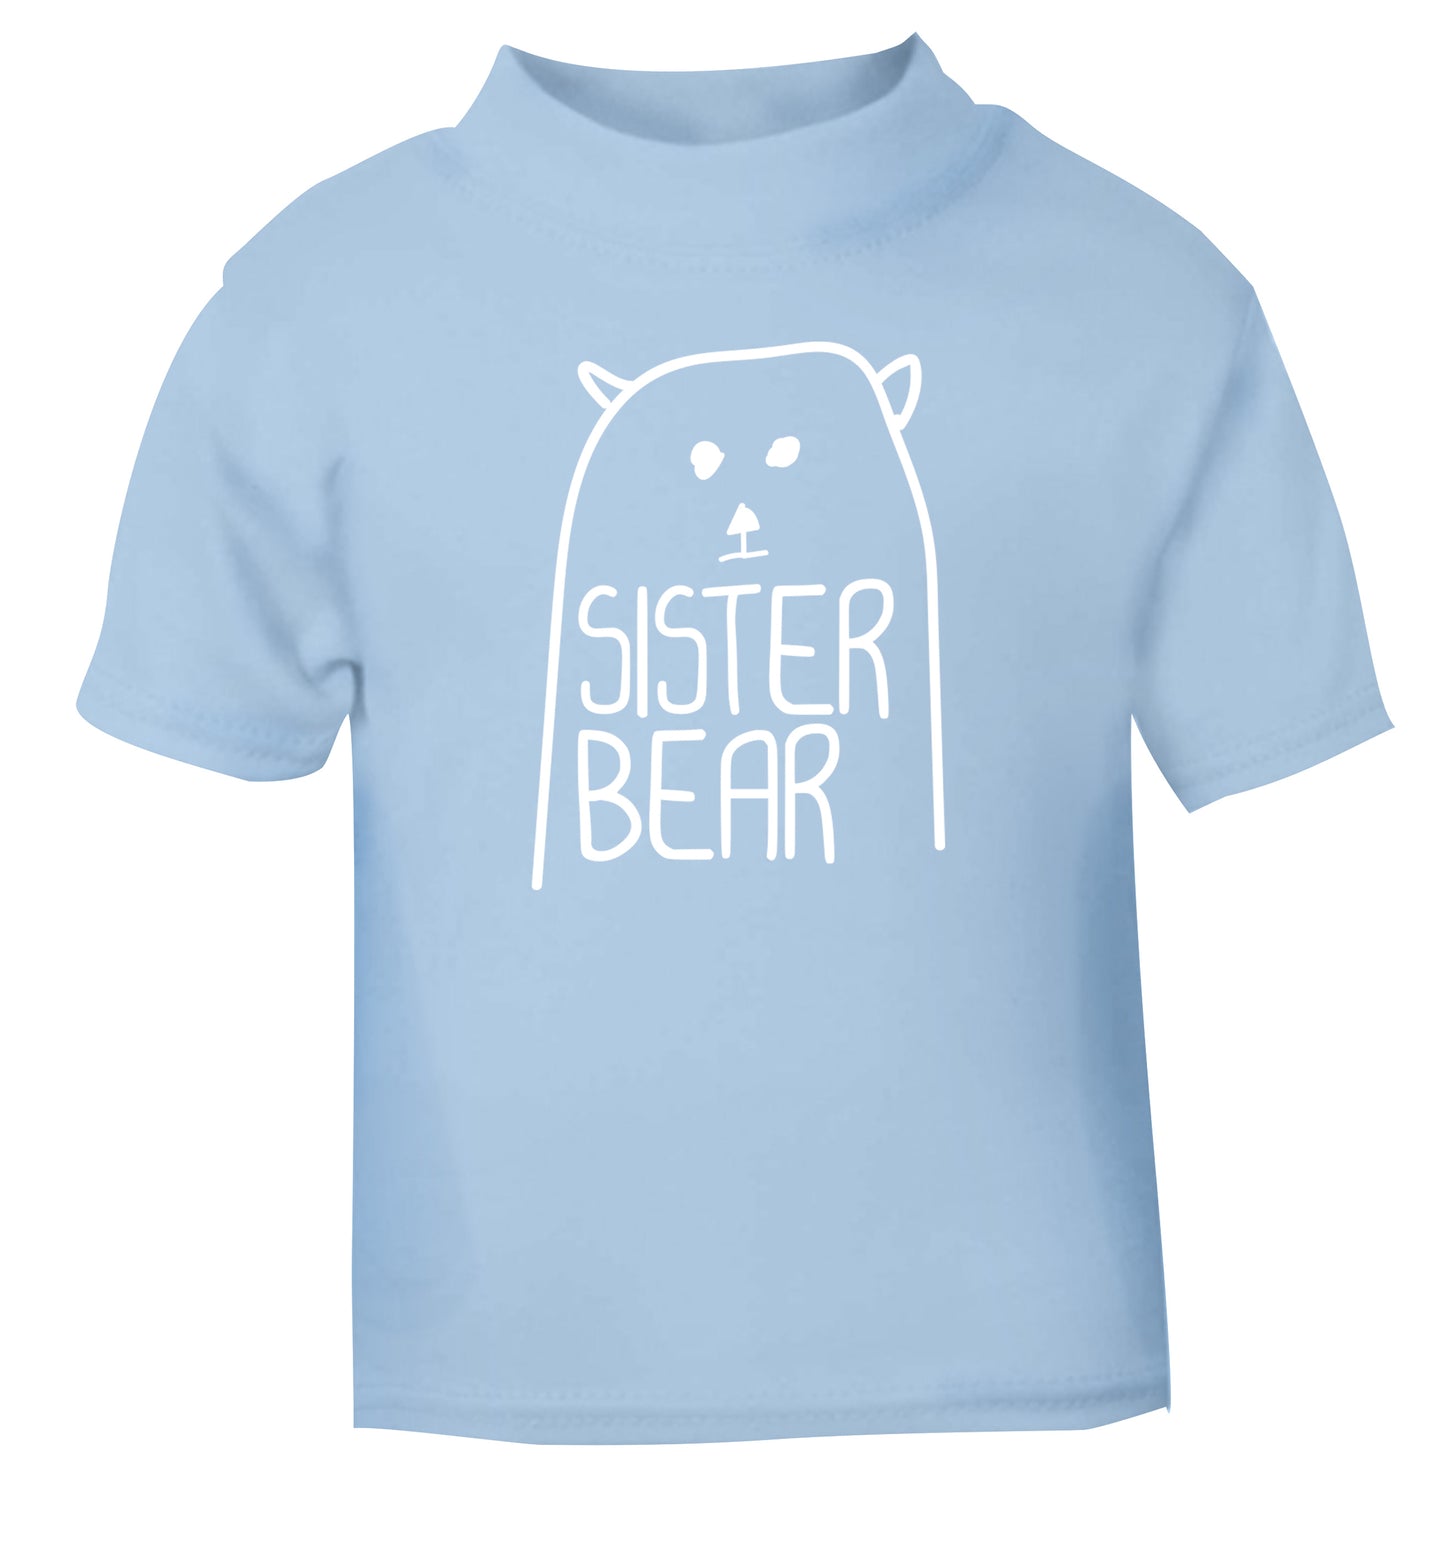 Sister bear light blue Baby Toddler Tshirt 2 Years